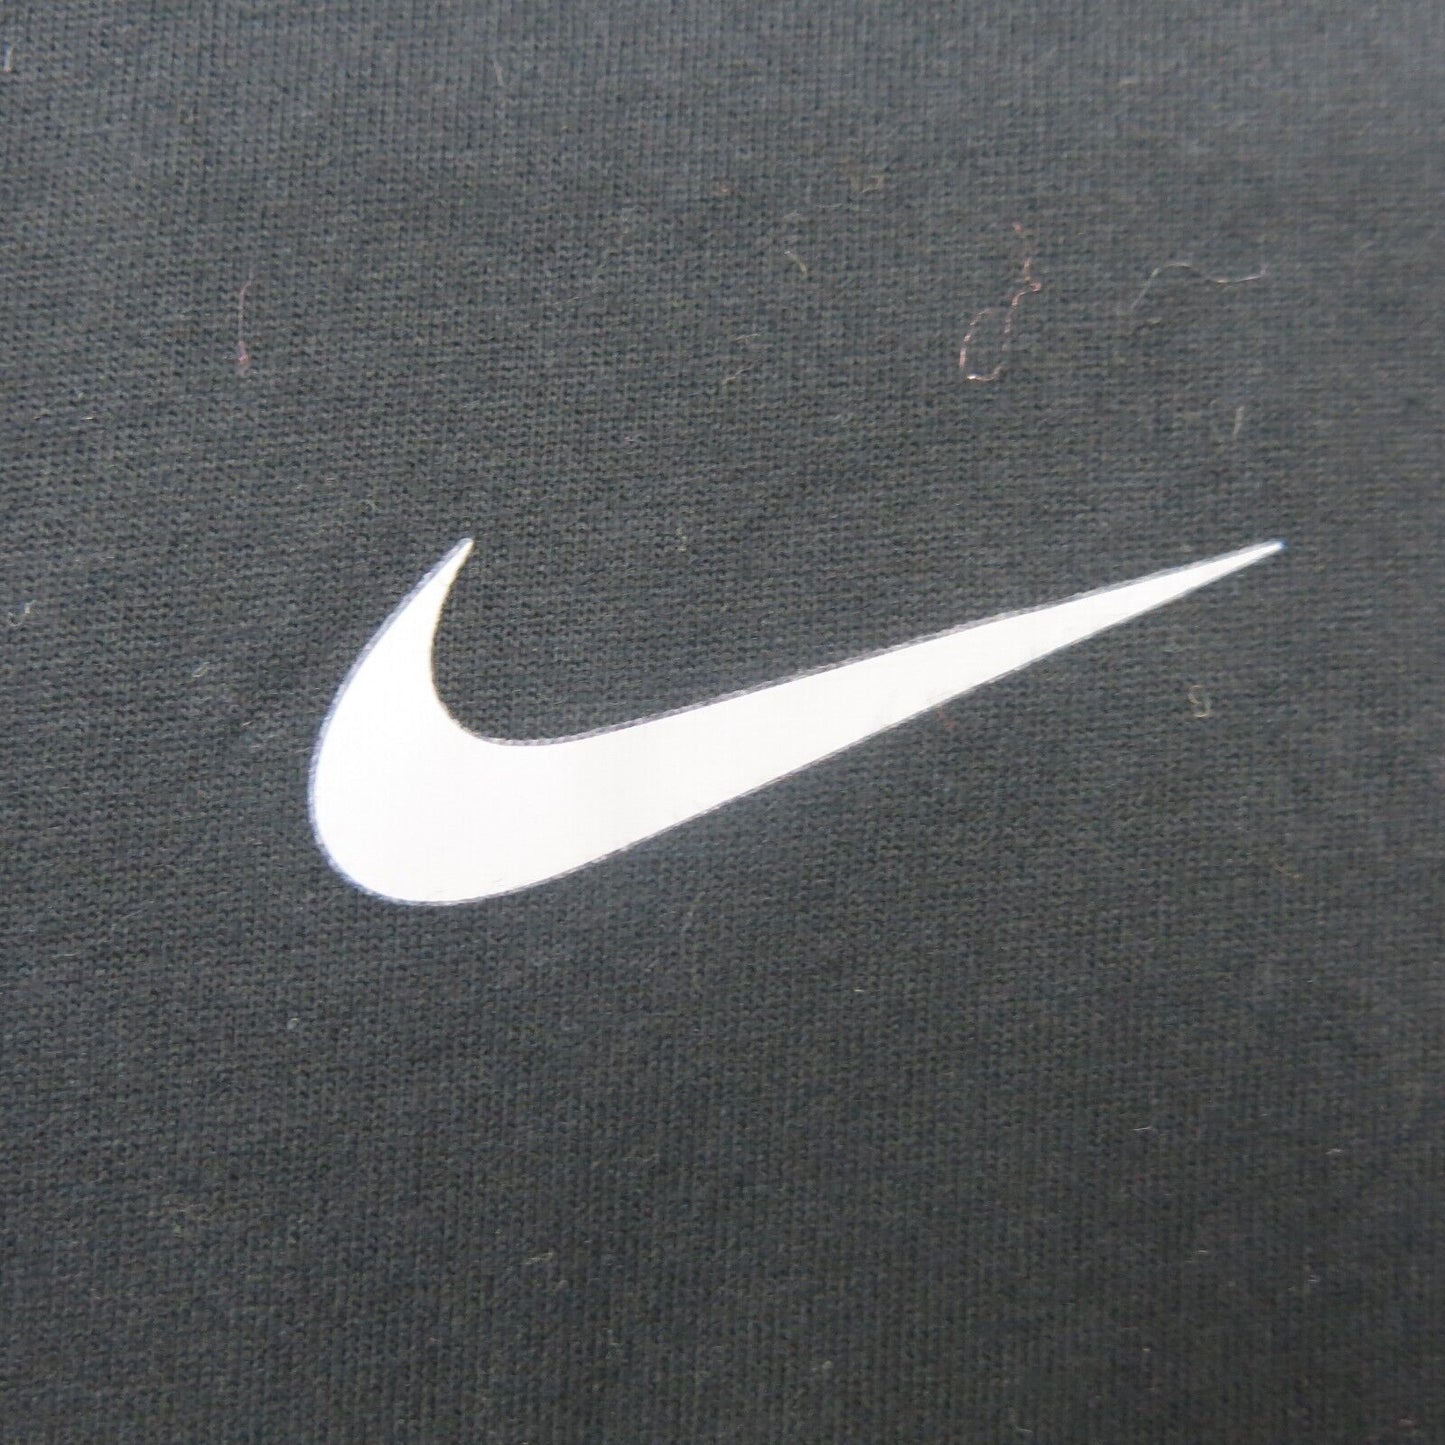 The Nike Tee Mens Tank Tee Dri Fit Sleeveless Logo Black Size Petite Small